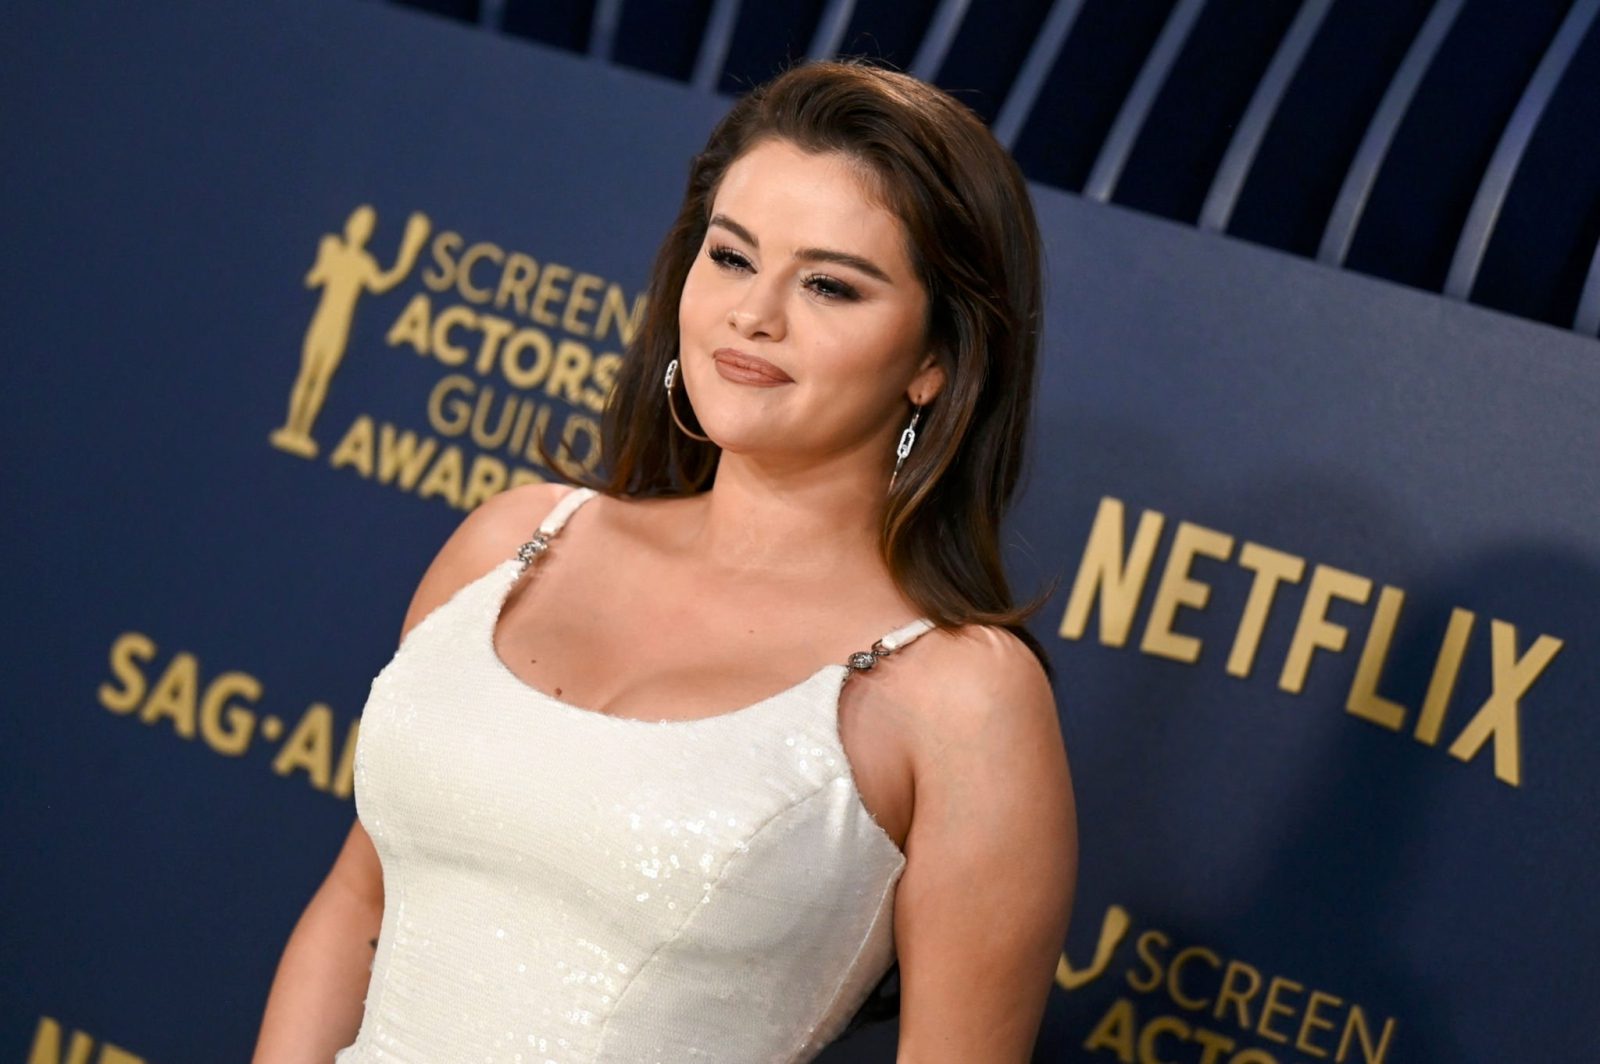 Selena Gomez White Dress Big Breasts Cleavage Sag Awards - Hot Celebs Home